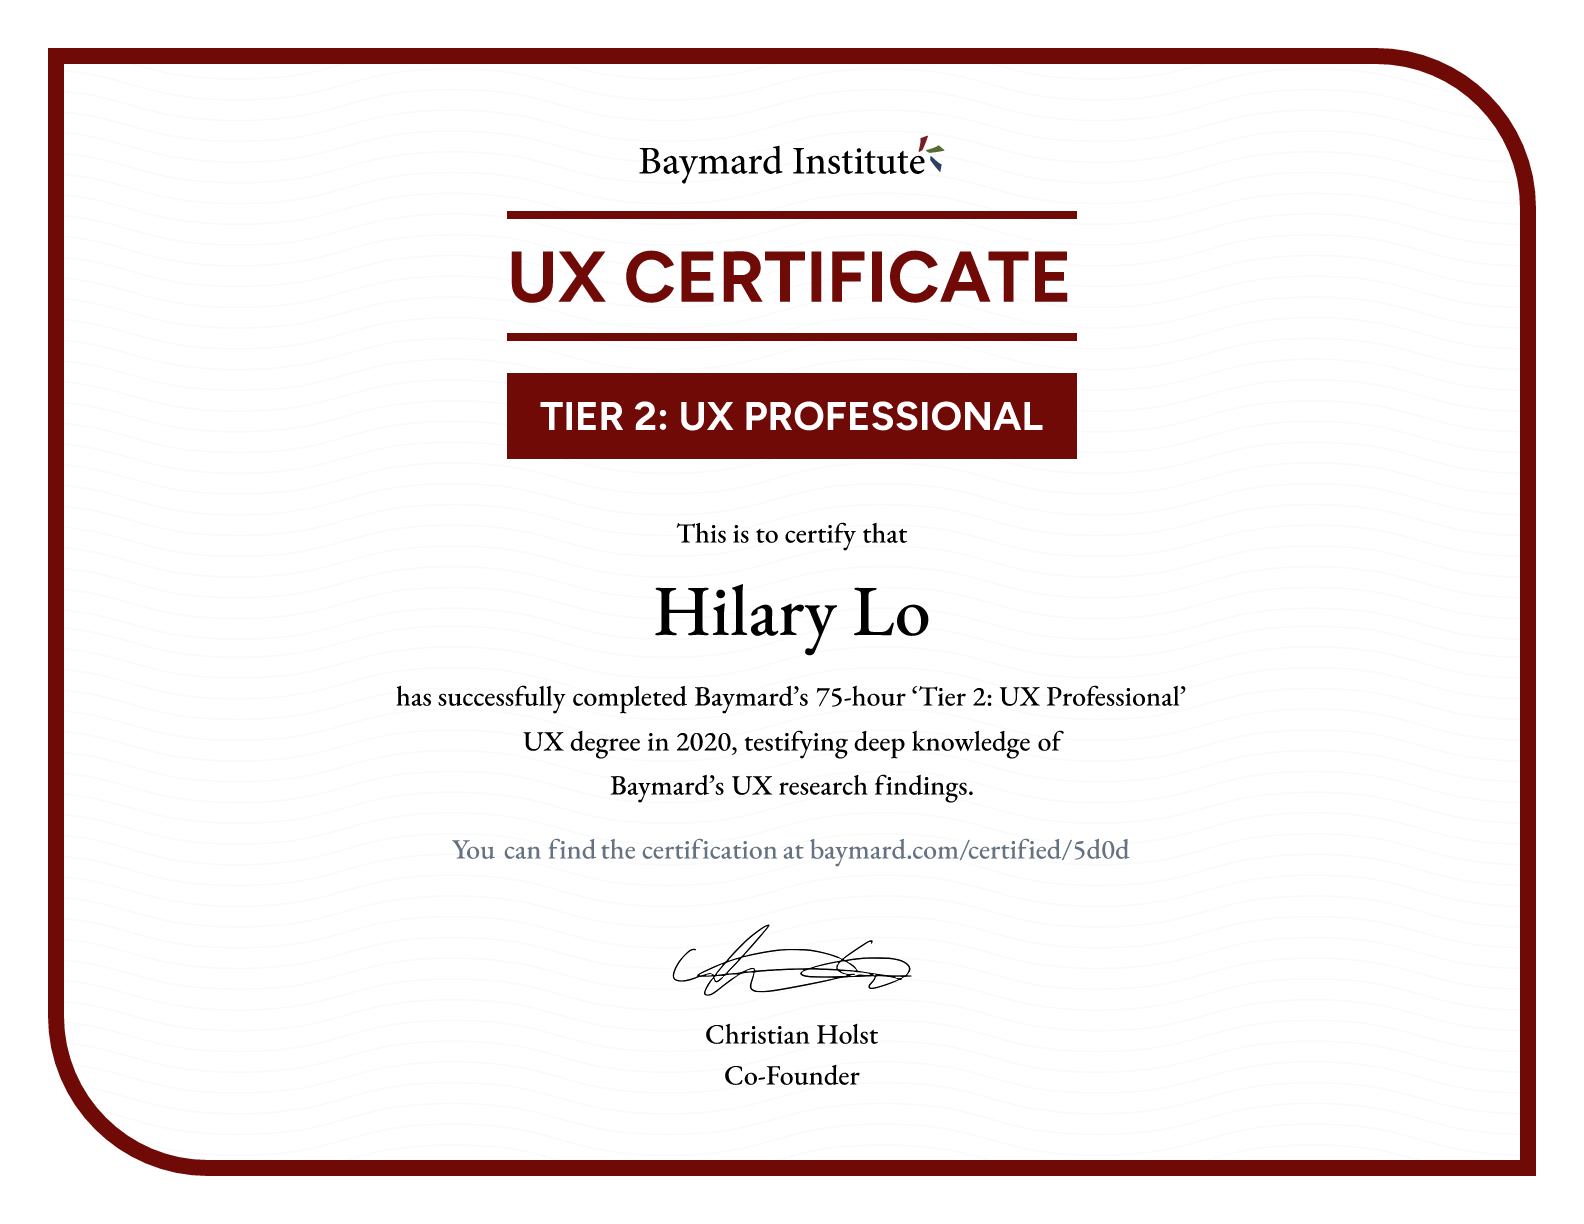 Hilary Lo’s certificate